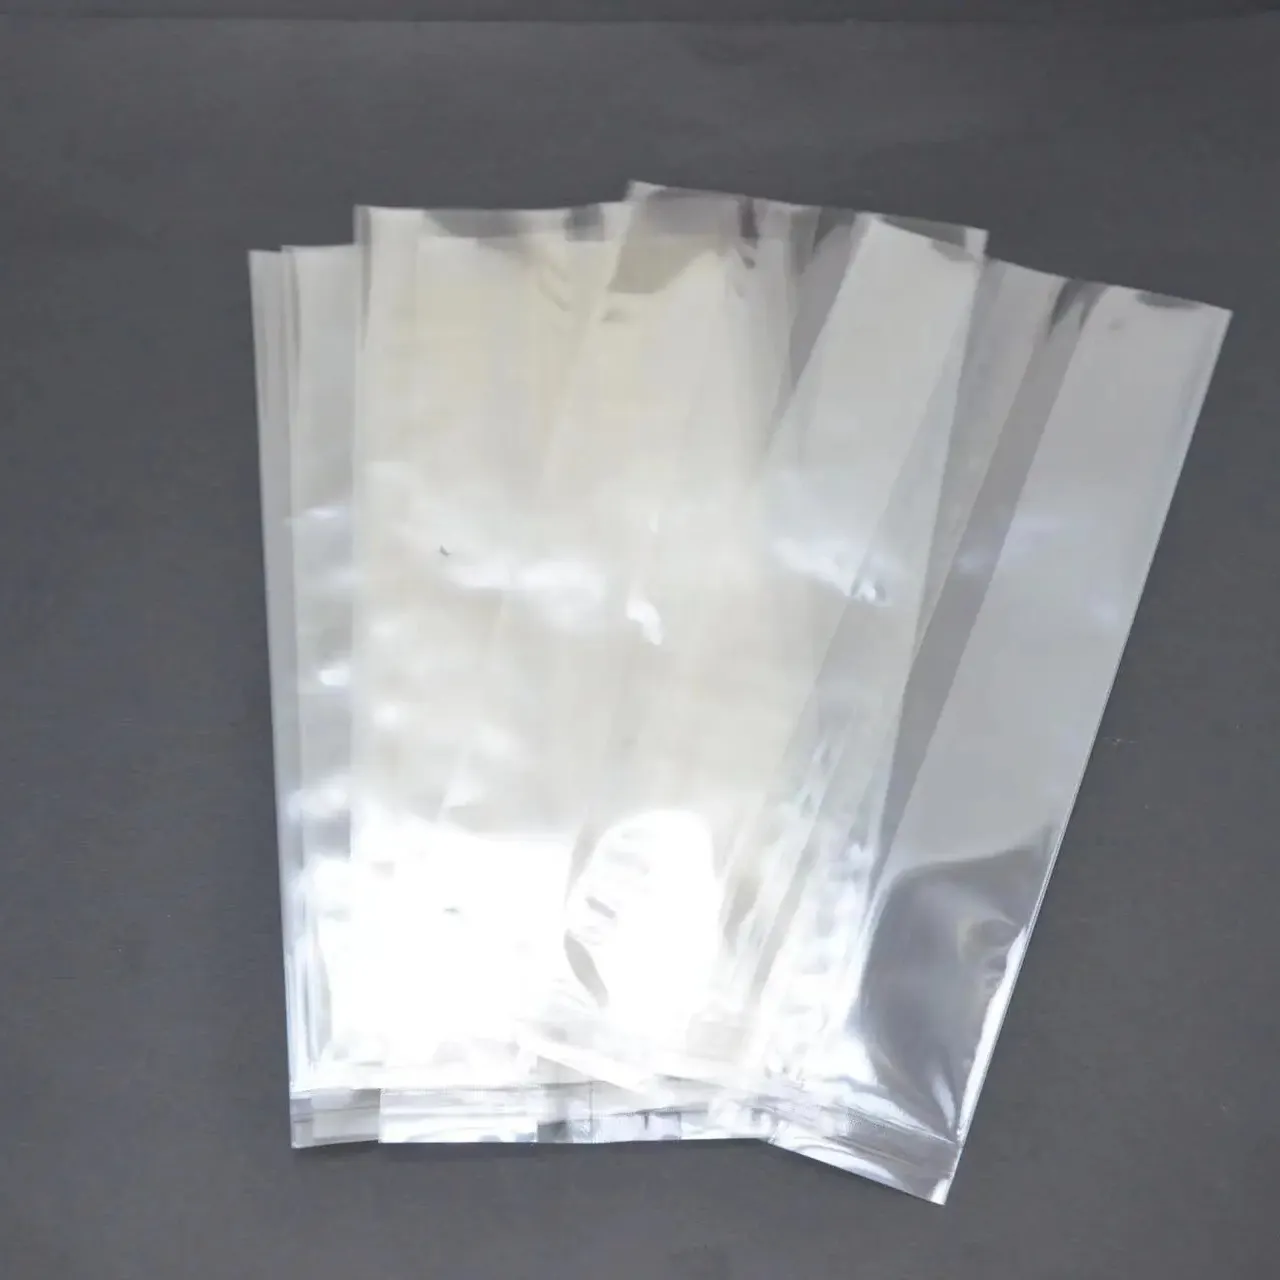 Impresión de logotipo Biodegradable Plástico transparente Dulces de Navidad Comida Transparente Impreso Auto Bolsas de celofán personalizadas